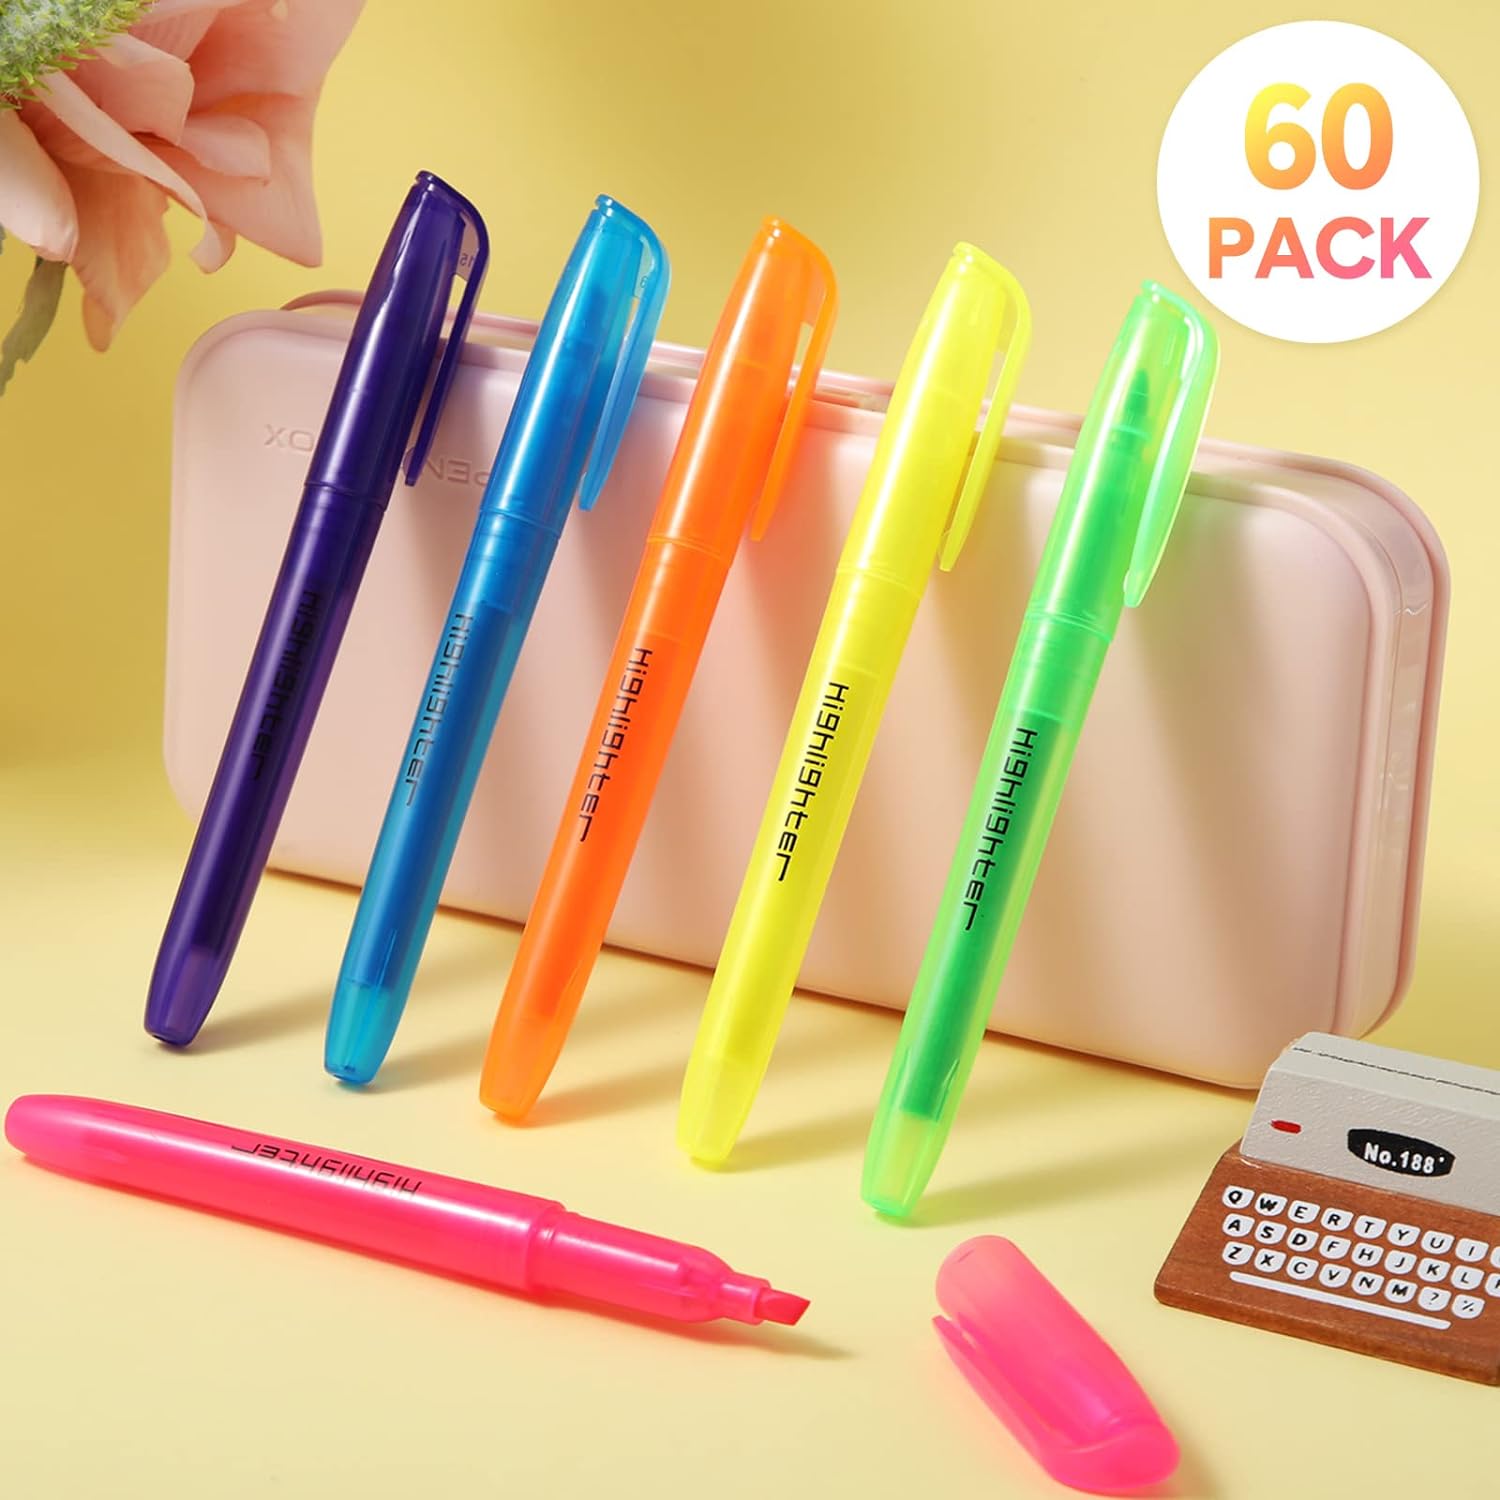 60pcs Highlighter Marker Pens Assorted Color